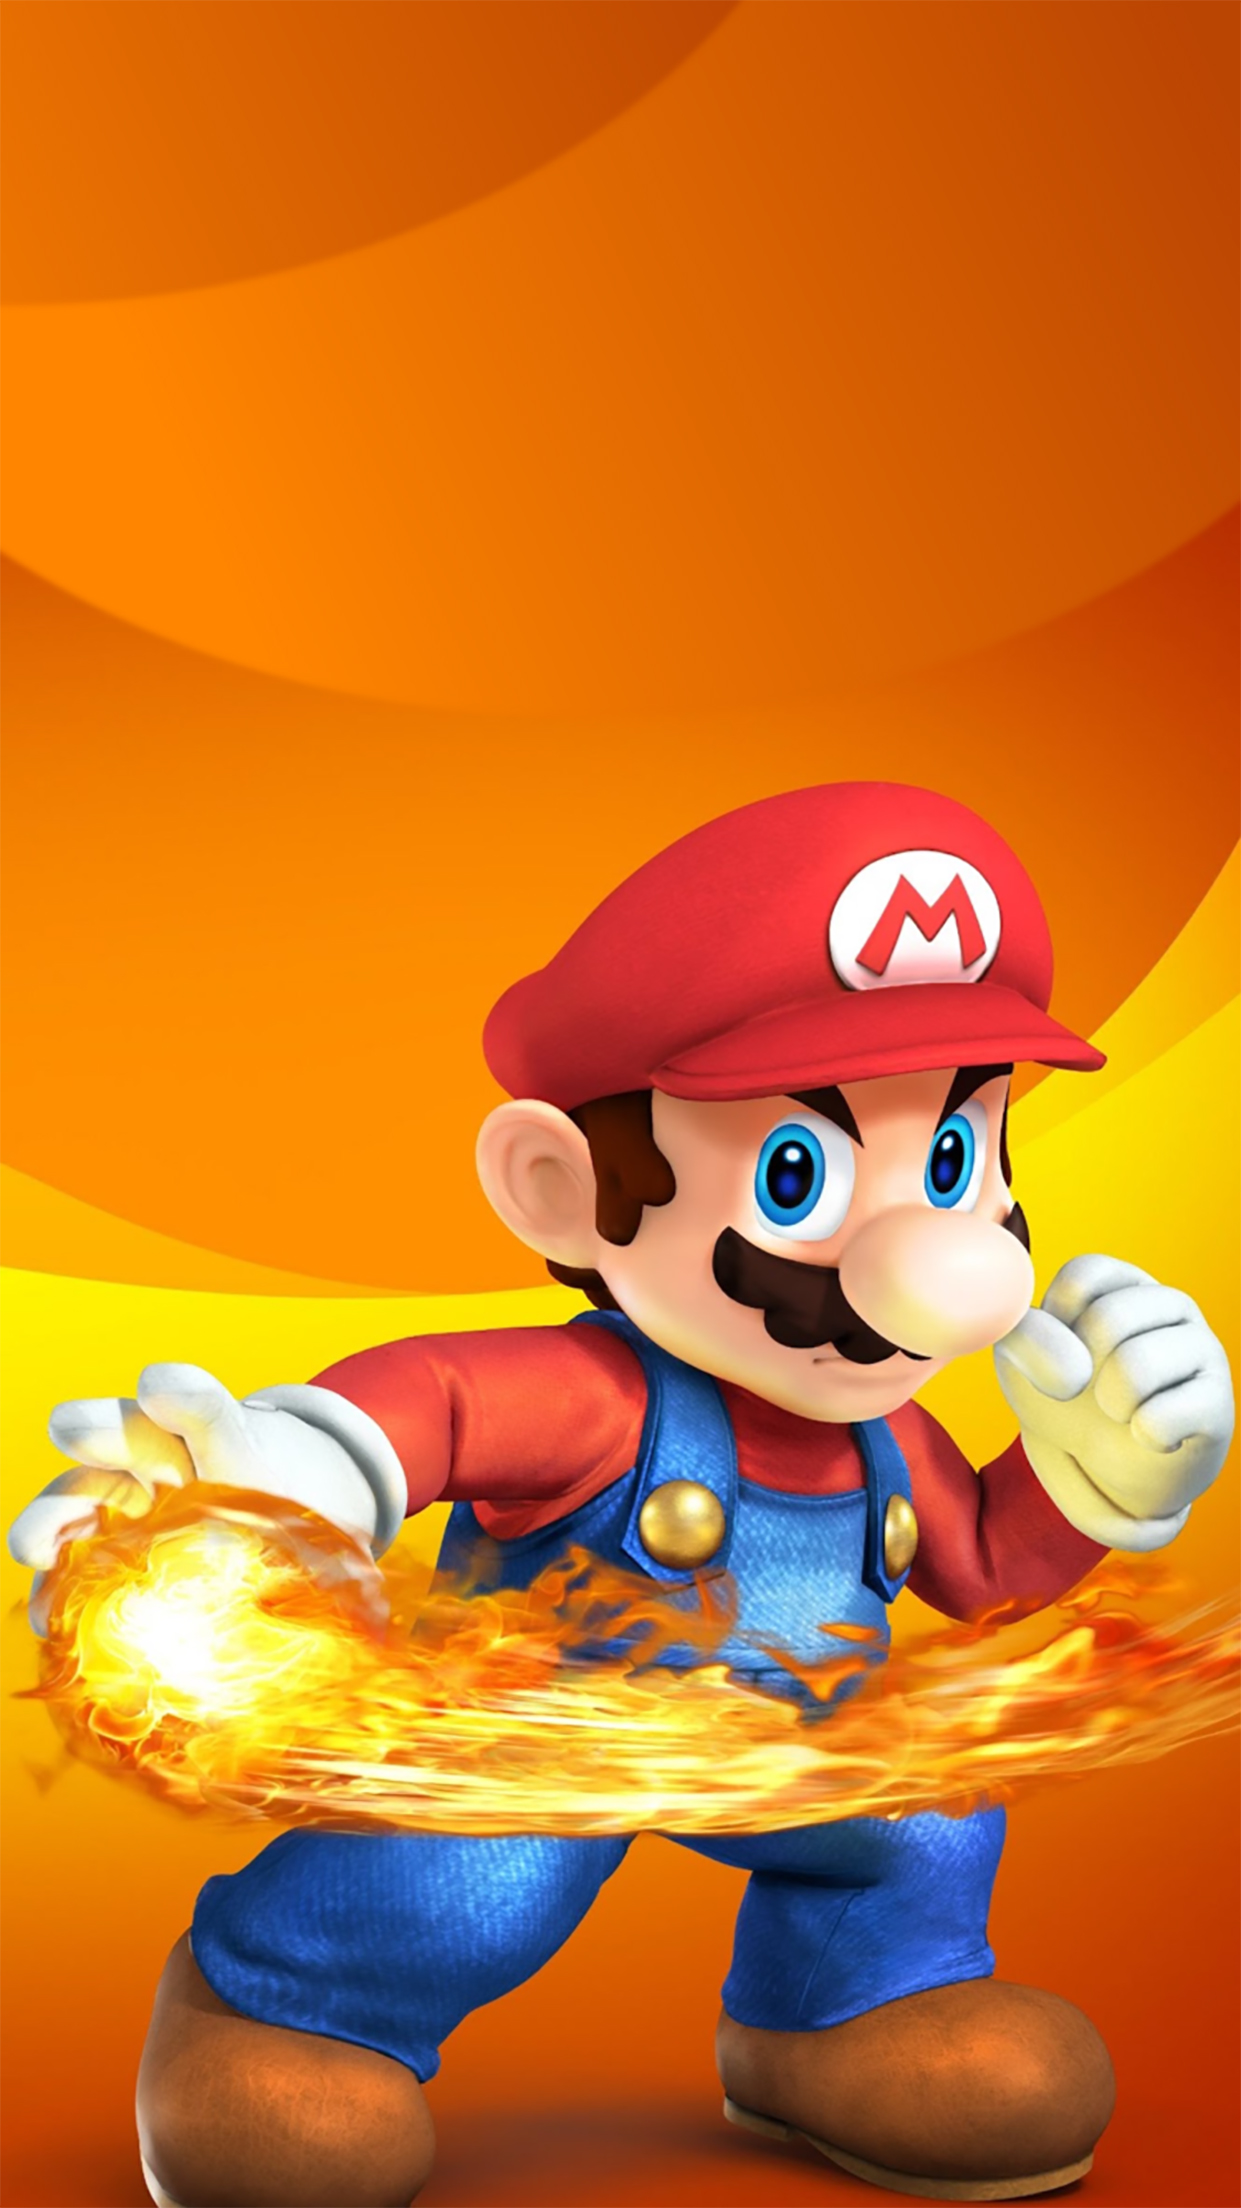 Super Mario, Fire Wallpaper for iPhone Pro Max, X, 6